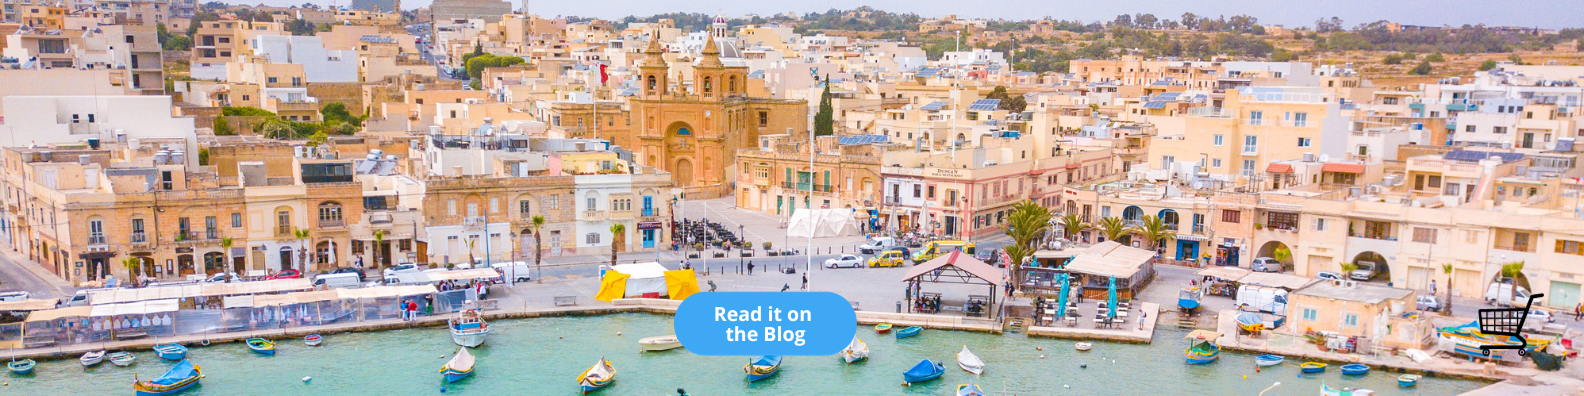 Blog Post View of the City Valletta in Malta - Malta Holidays Barter's Travelnet